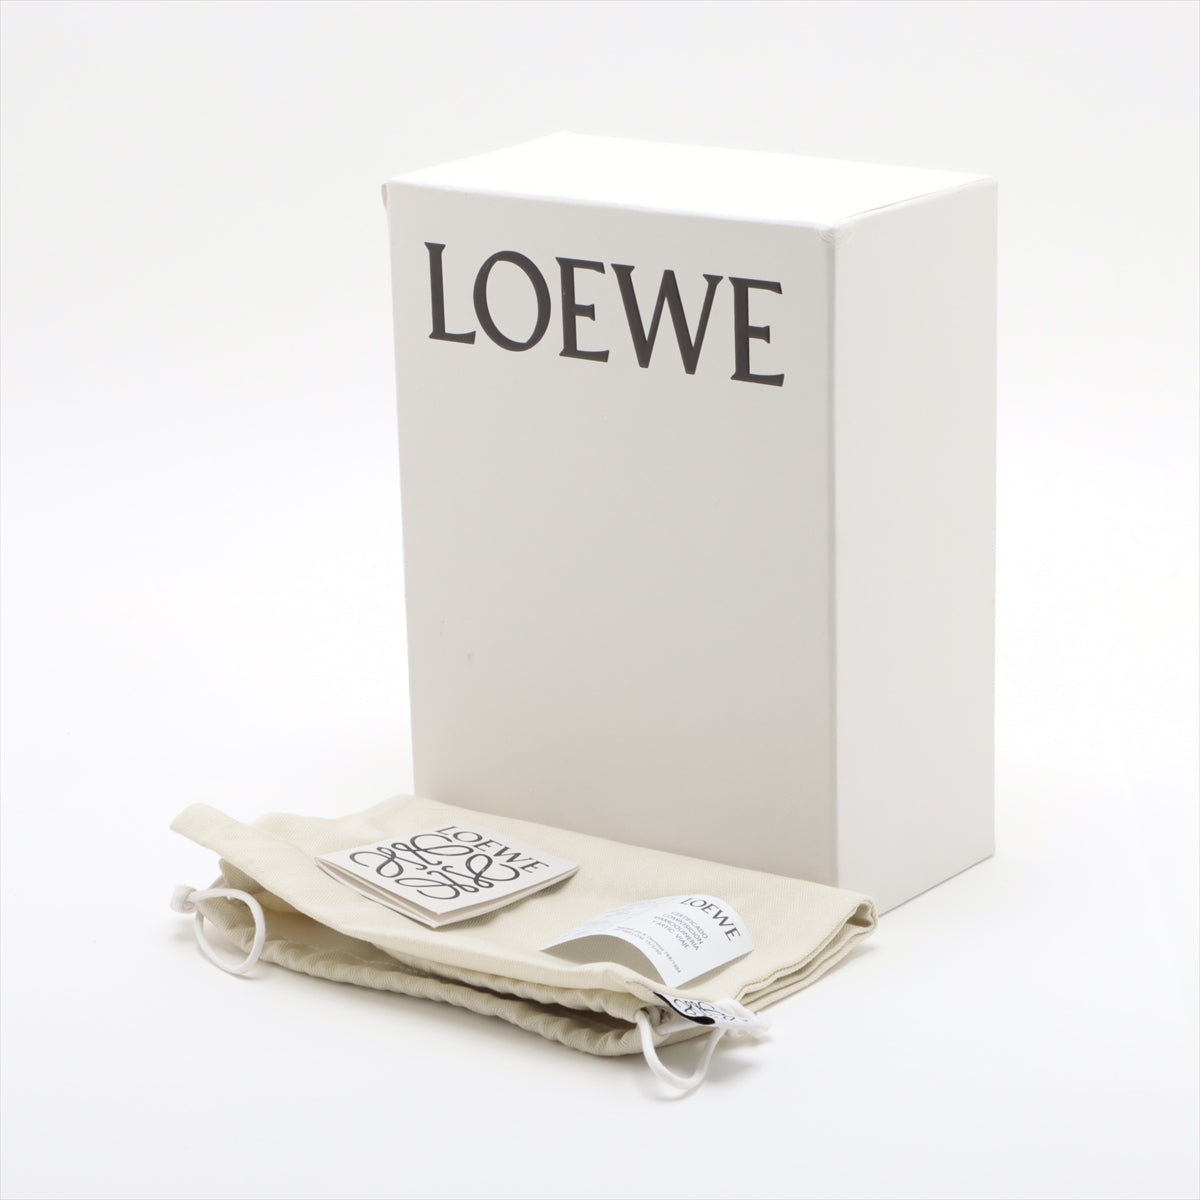 Loewe Balloon Small Leather Shoulder Bag Brown Luggage